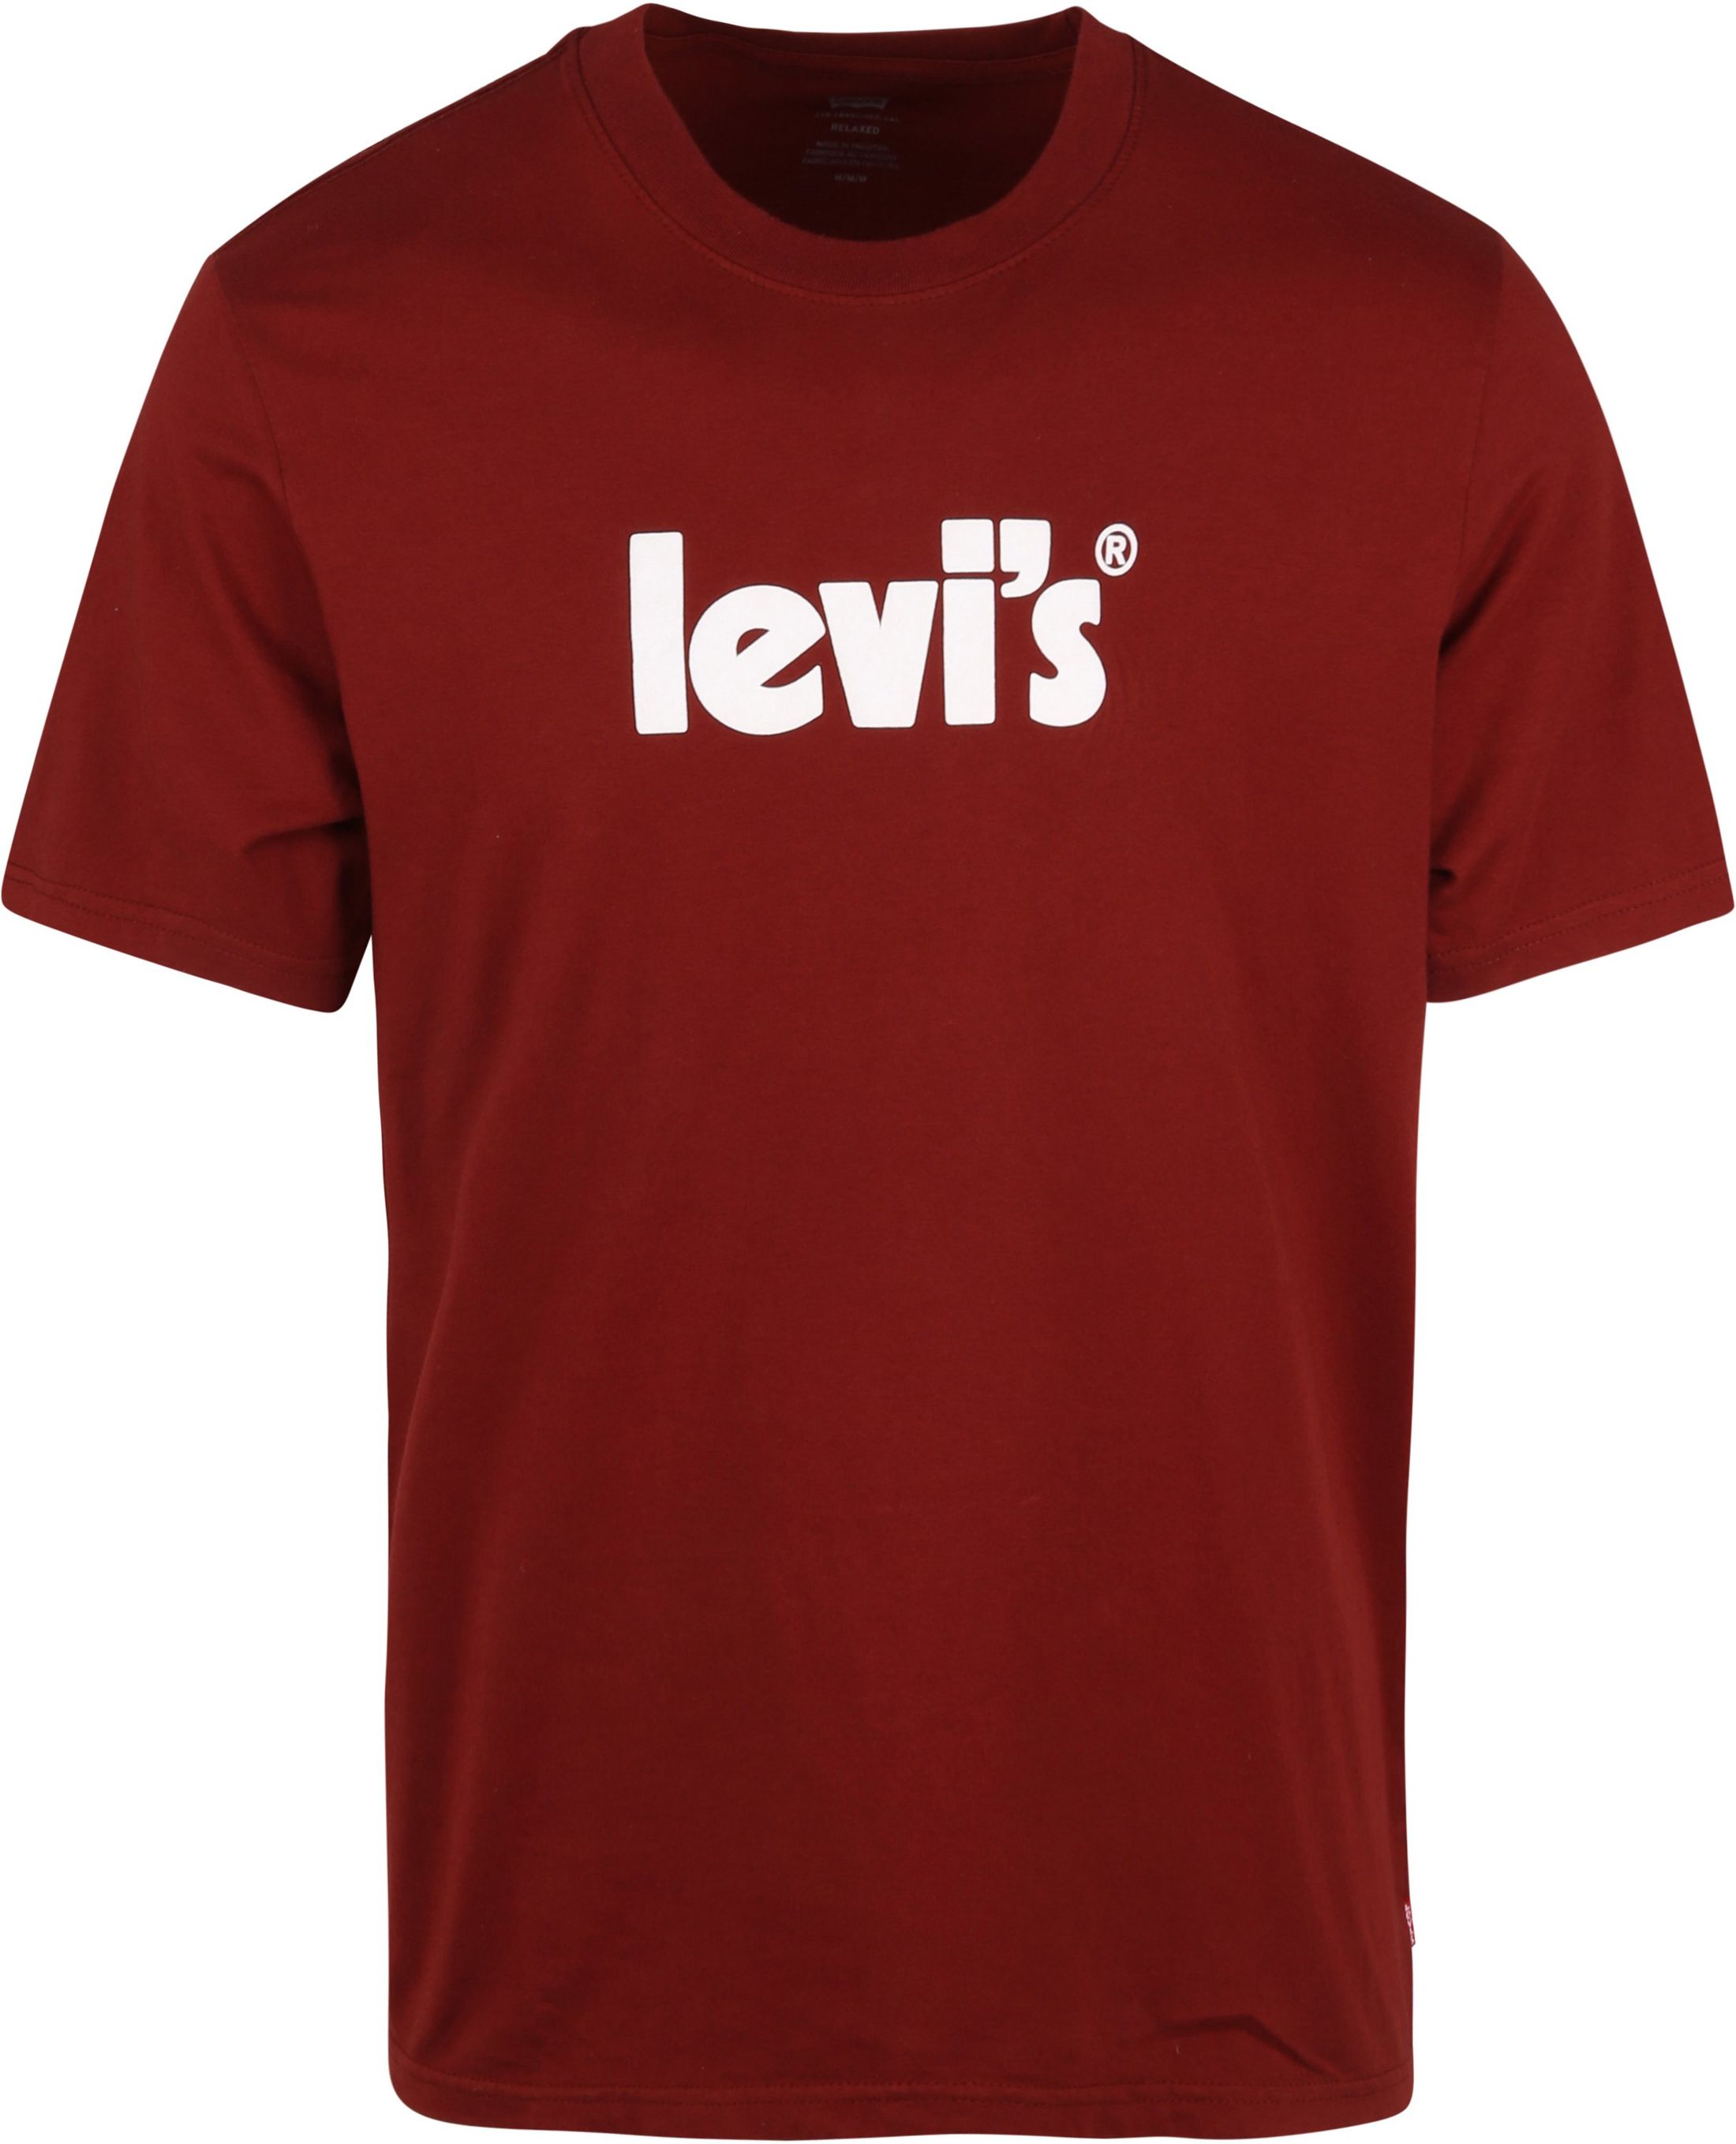 Levi's T Shirt Logo Burgundy Red size L